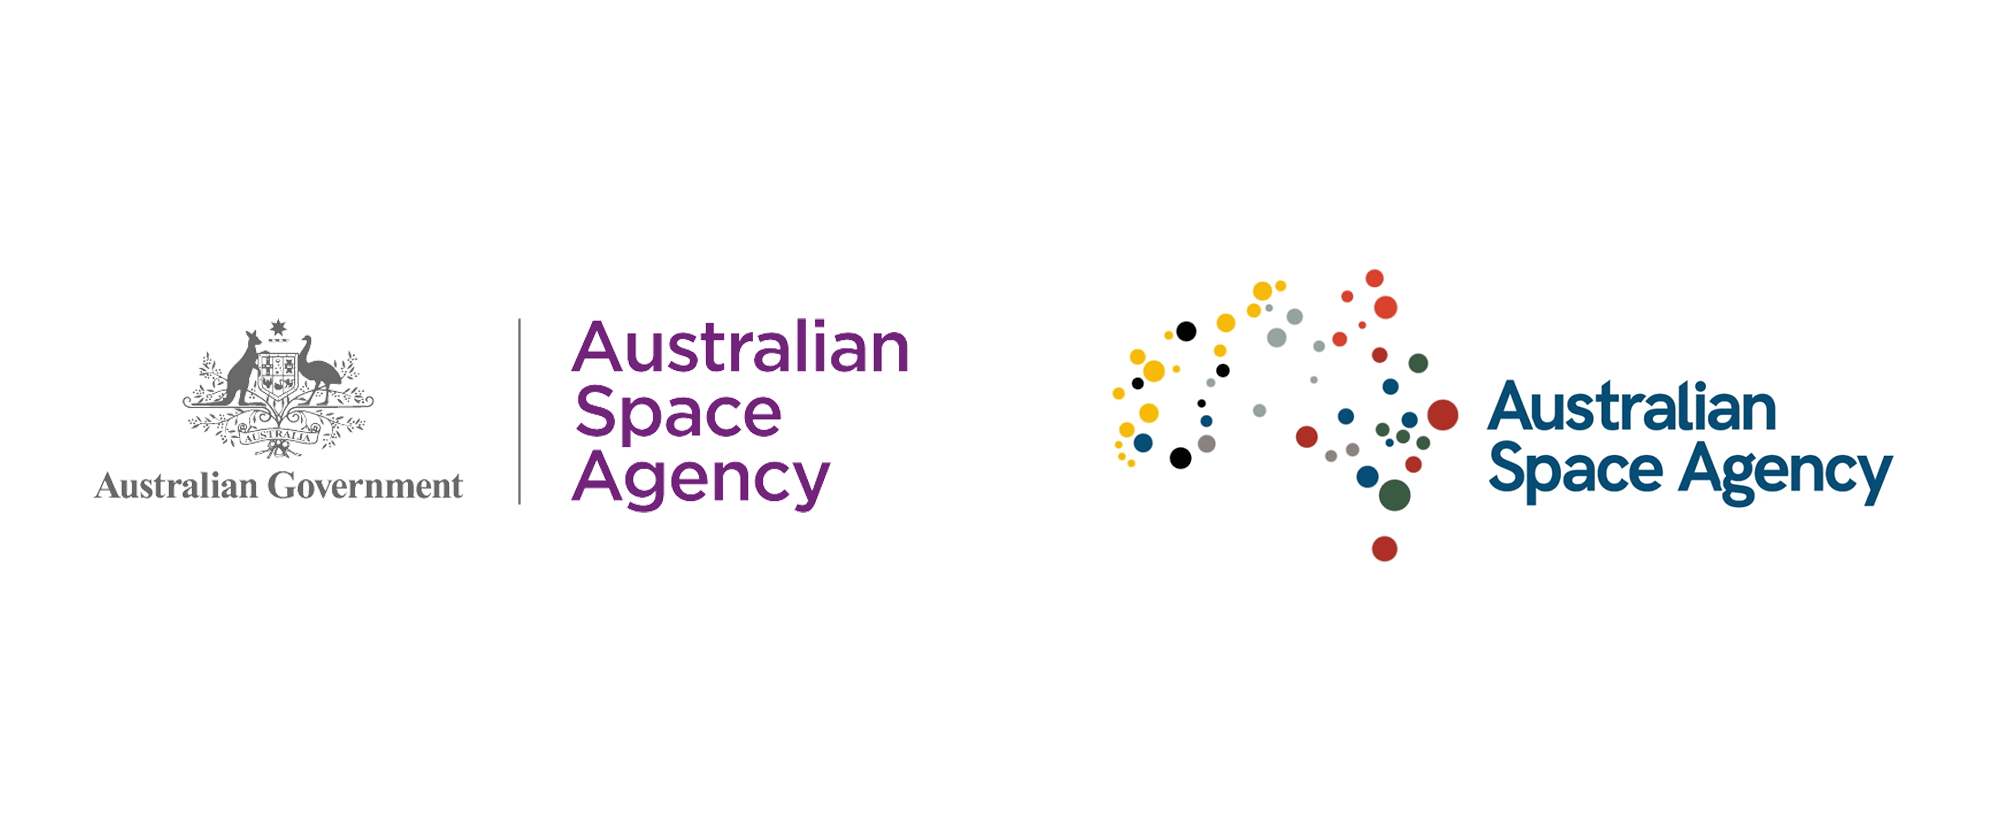 Space Agency Logo - Brand New: New Logo for Australian Space Agency